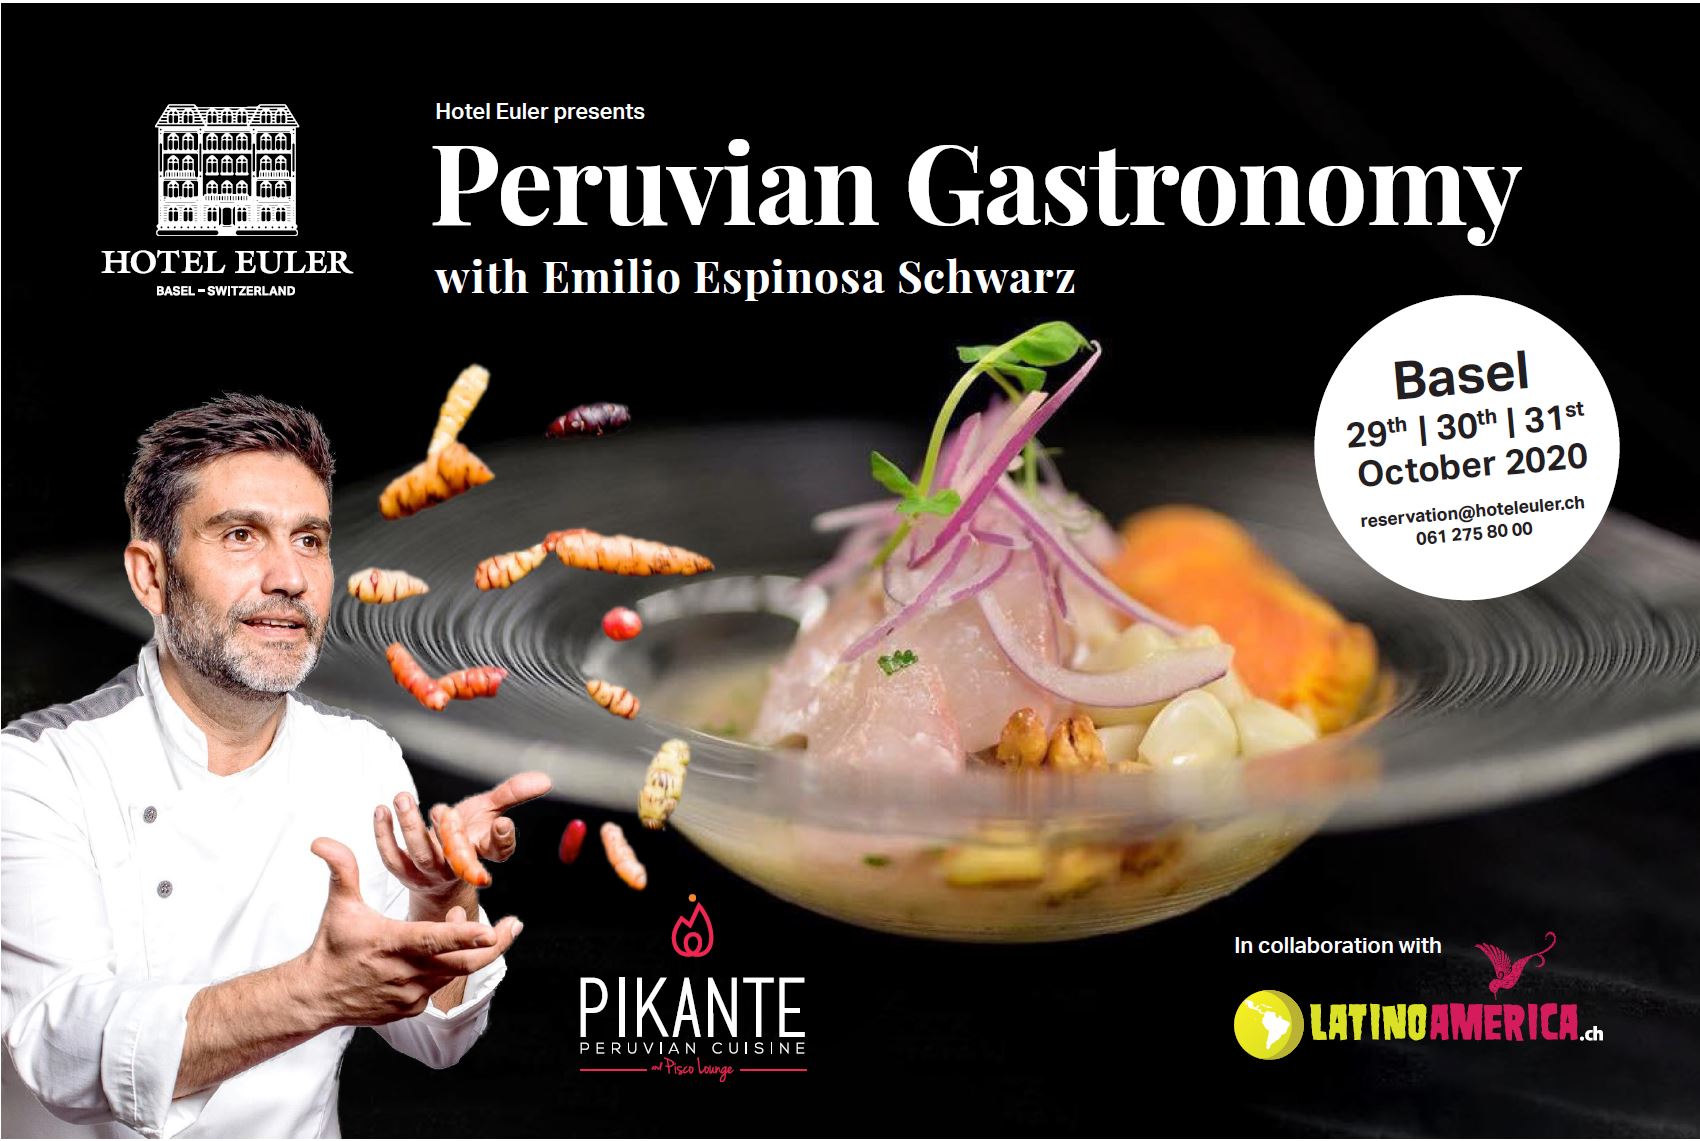 Hotel Euler presents Peruvian Gastronomy